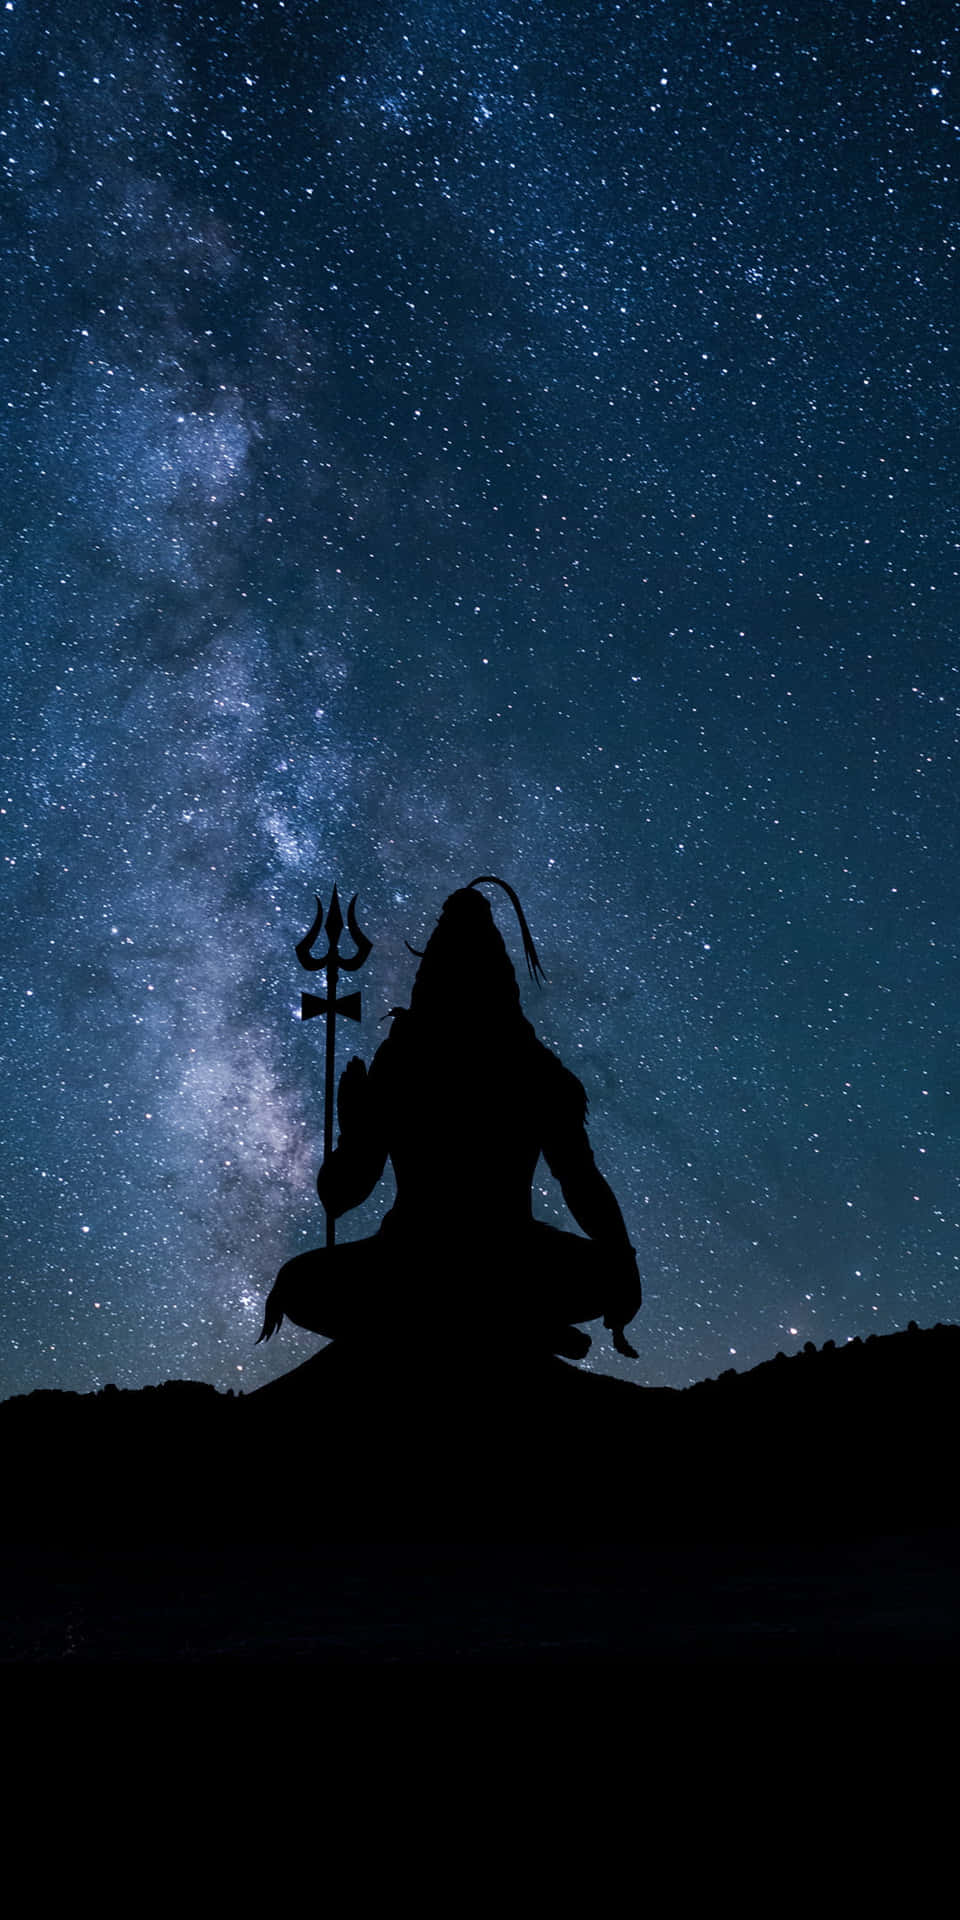 Captivating Image Of Lord Shiva In Meditation